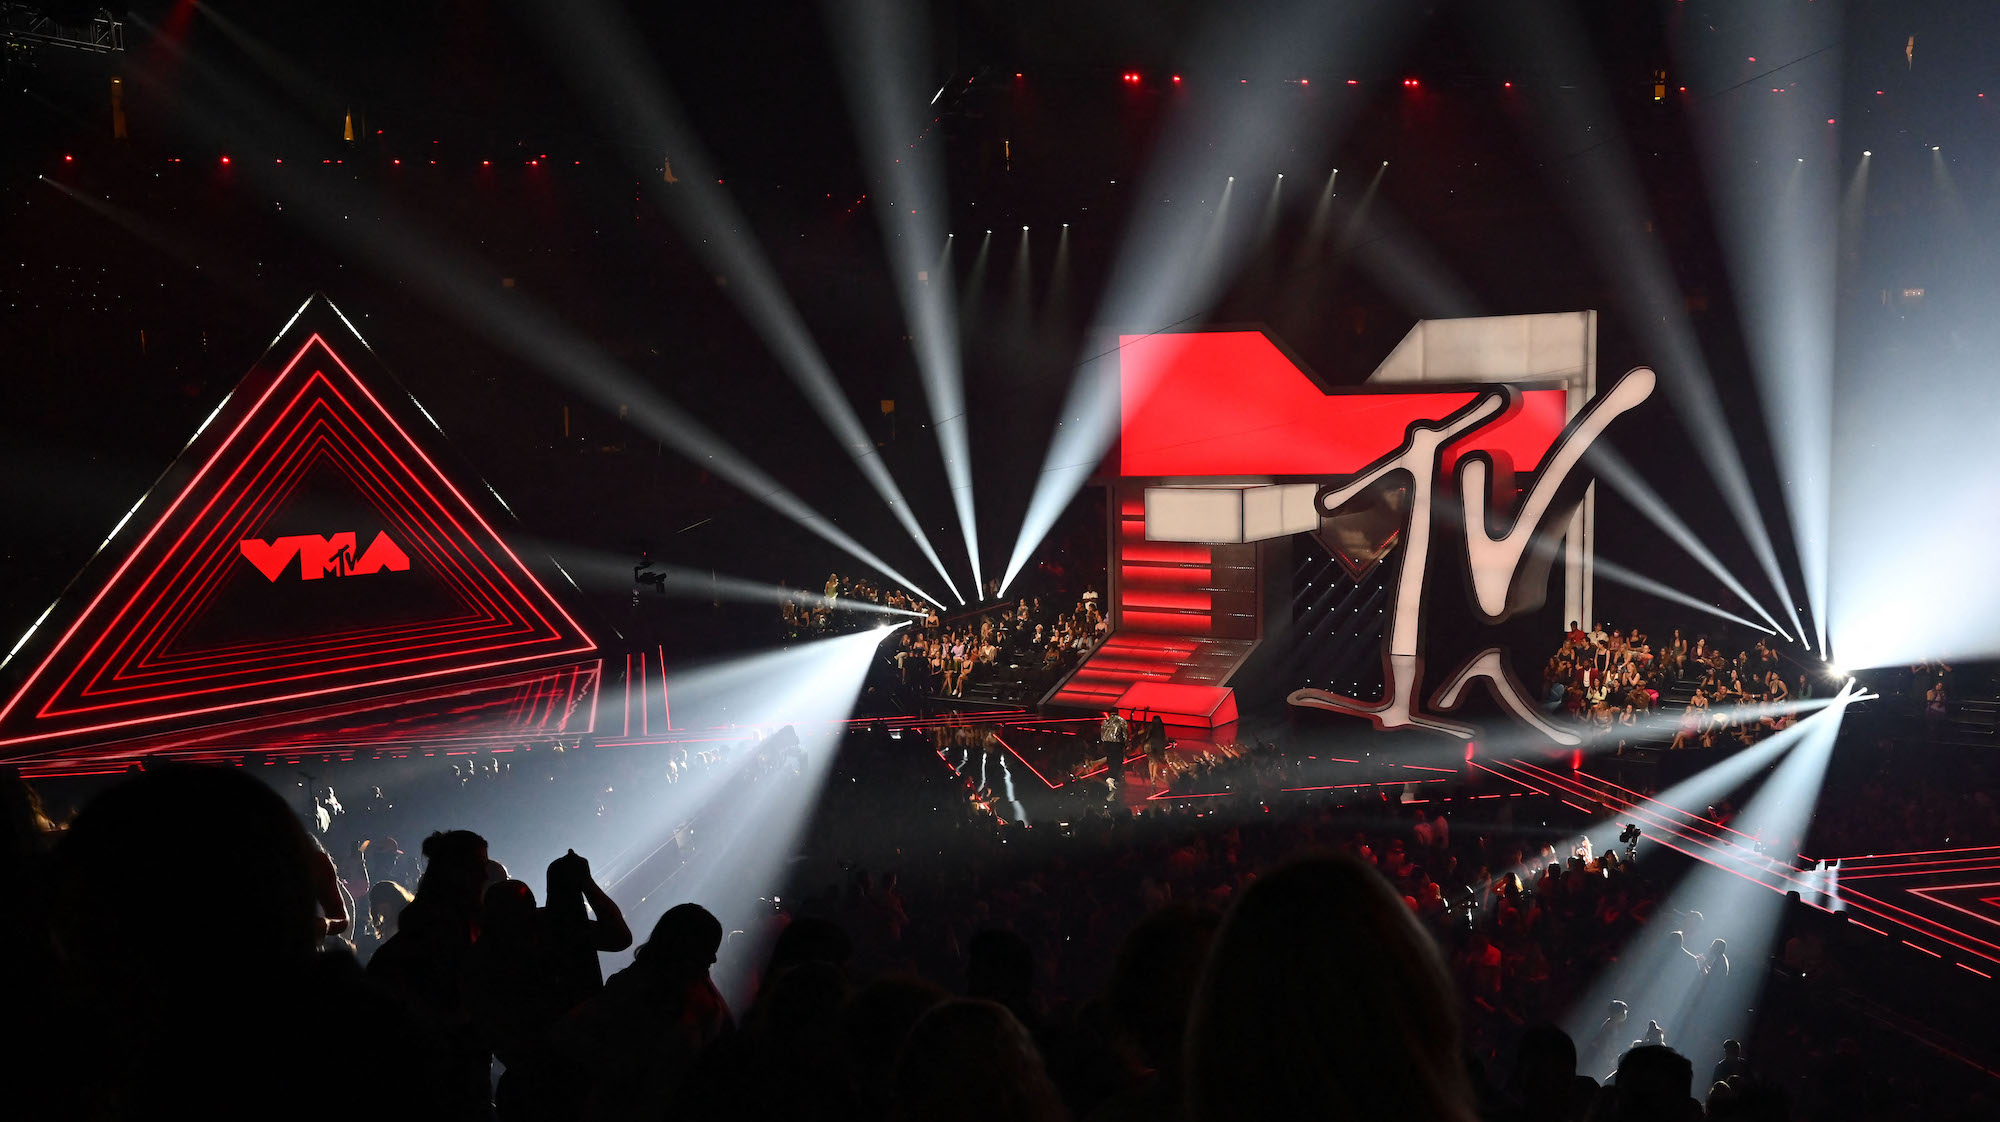 MTV Gave the VMAs TVs Biggest Promo Push Three Weeks in a Row Next TV